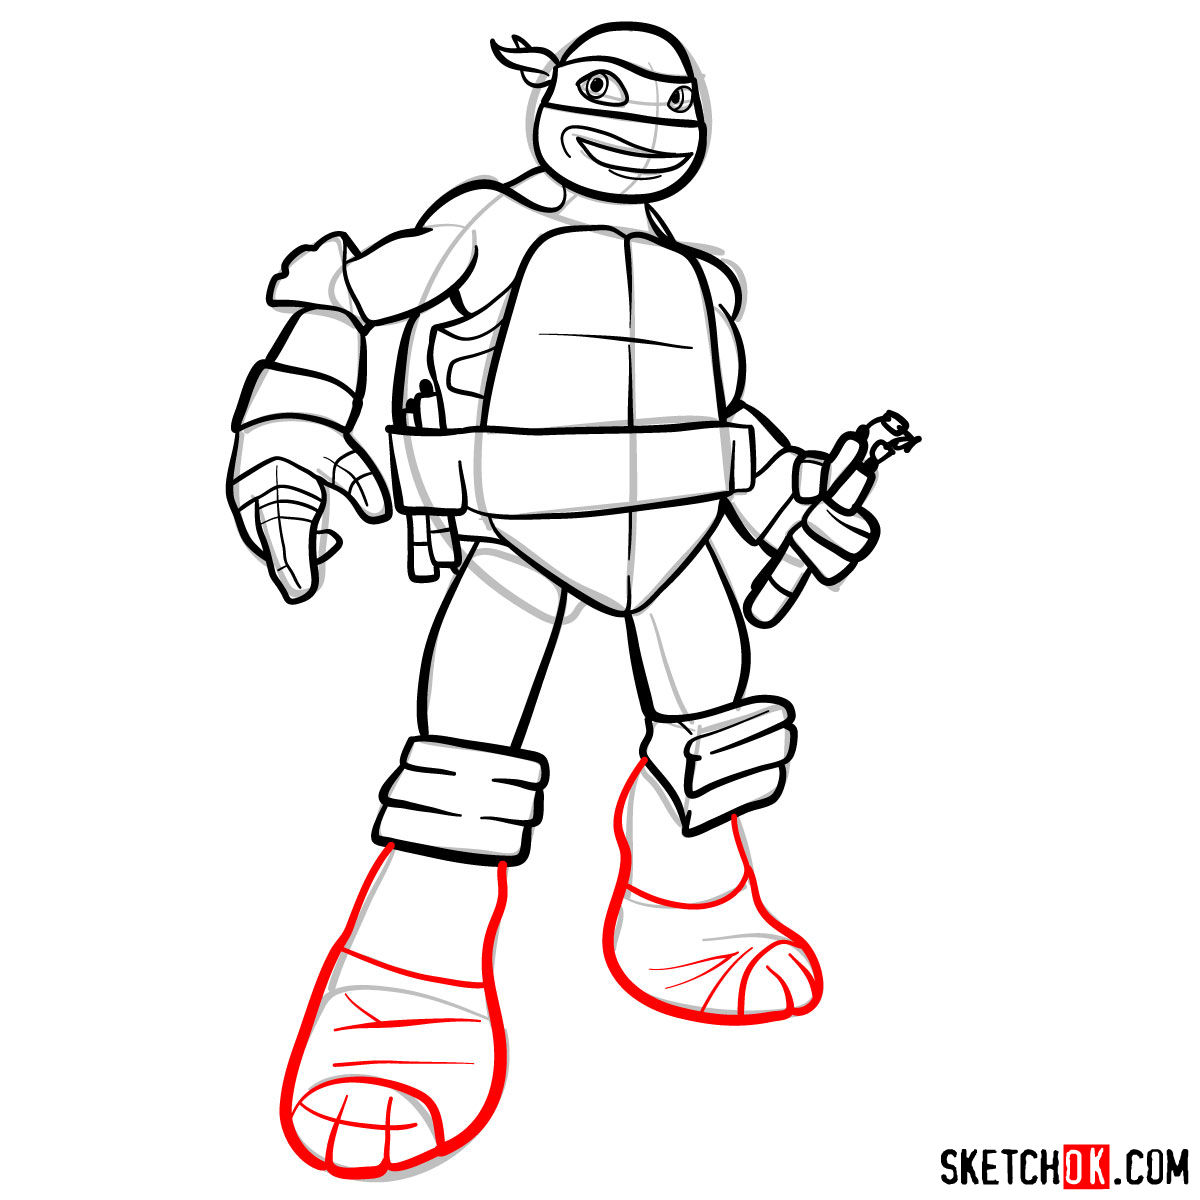 How to draw Michaelangelo ninja turtle cartoon style - step 11